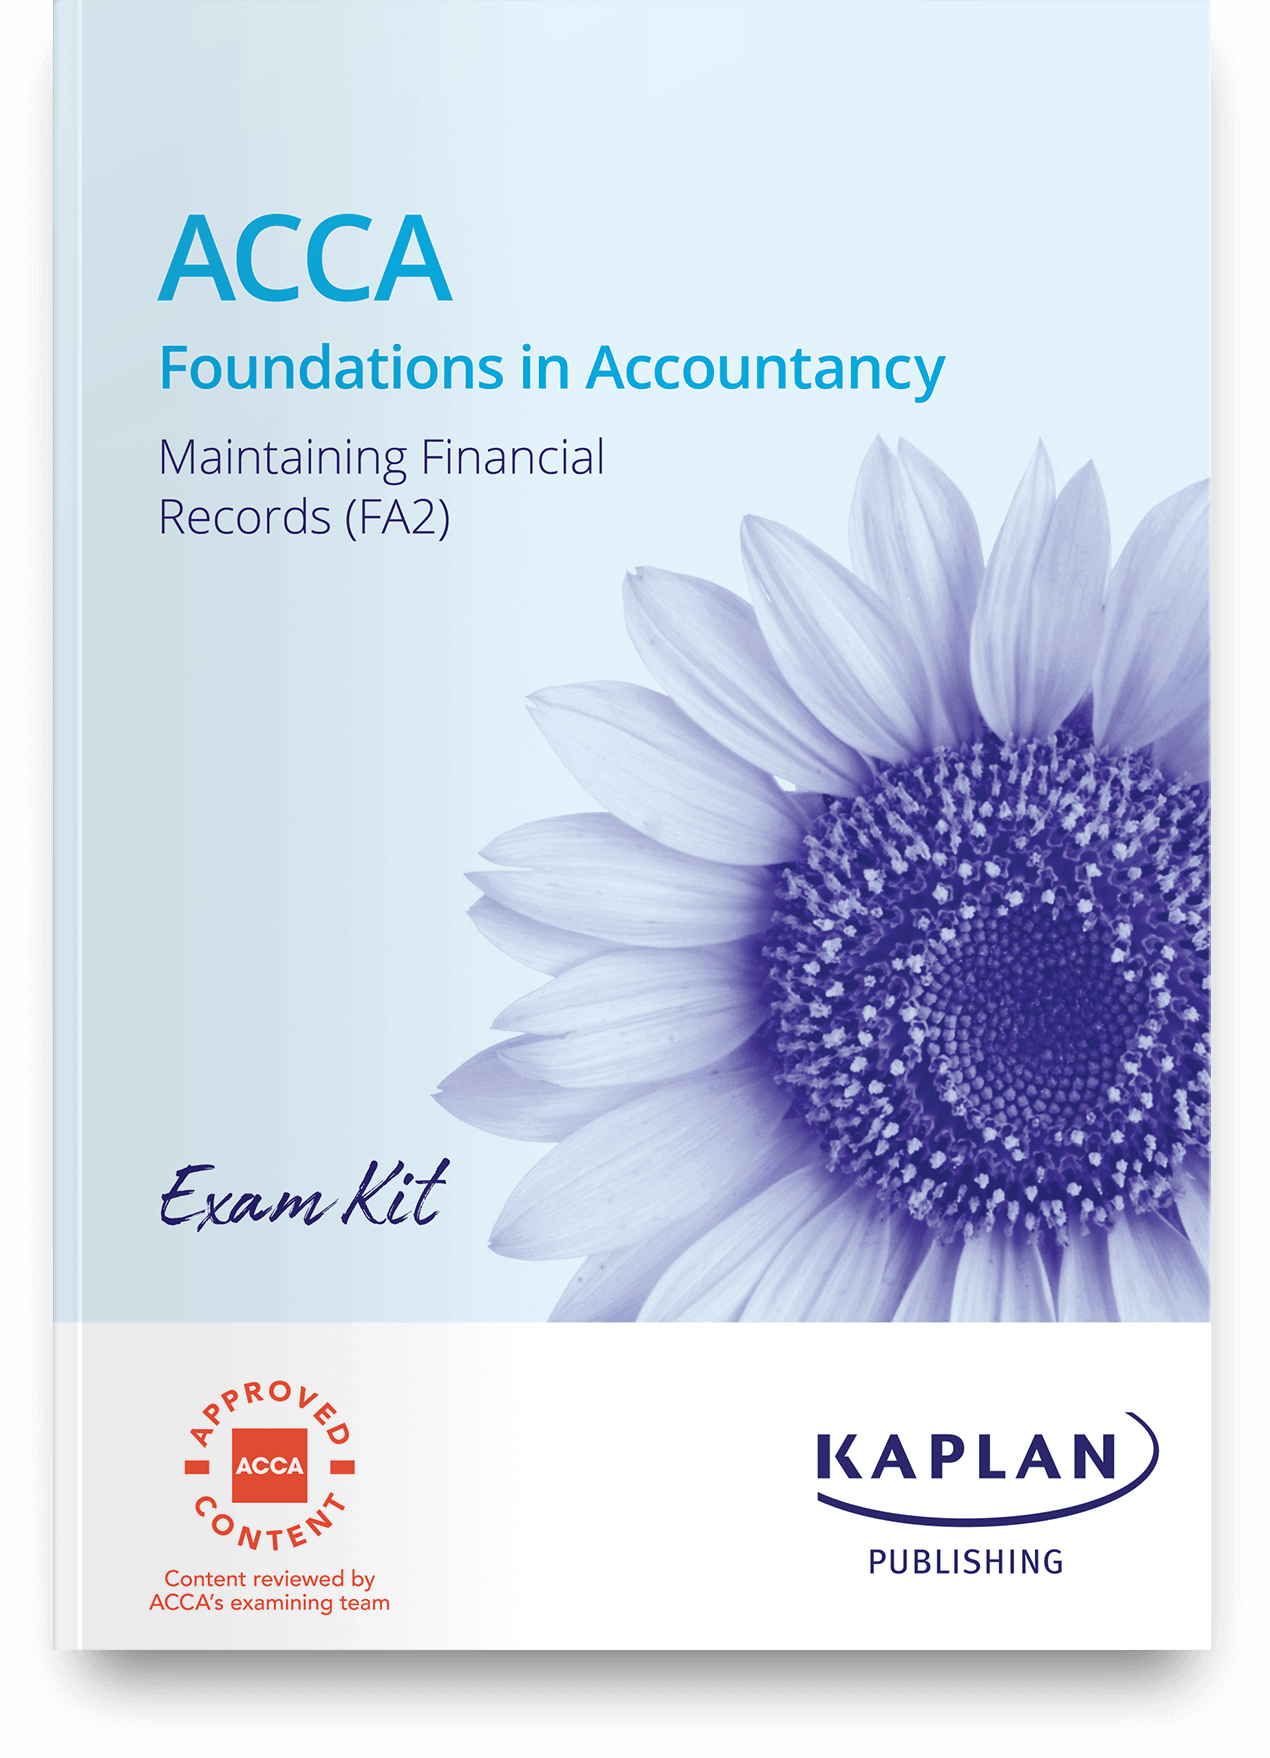 ACCA Foundations - Maintaining Financial Records (FA2) - Exam Kit